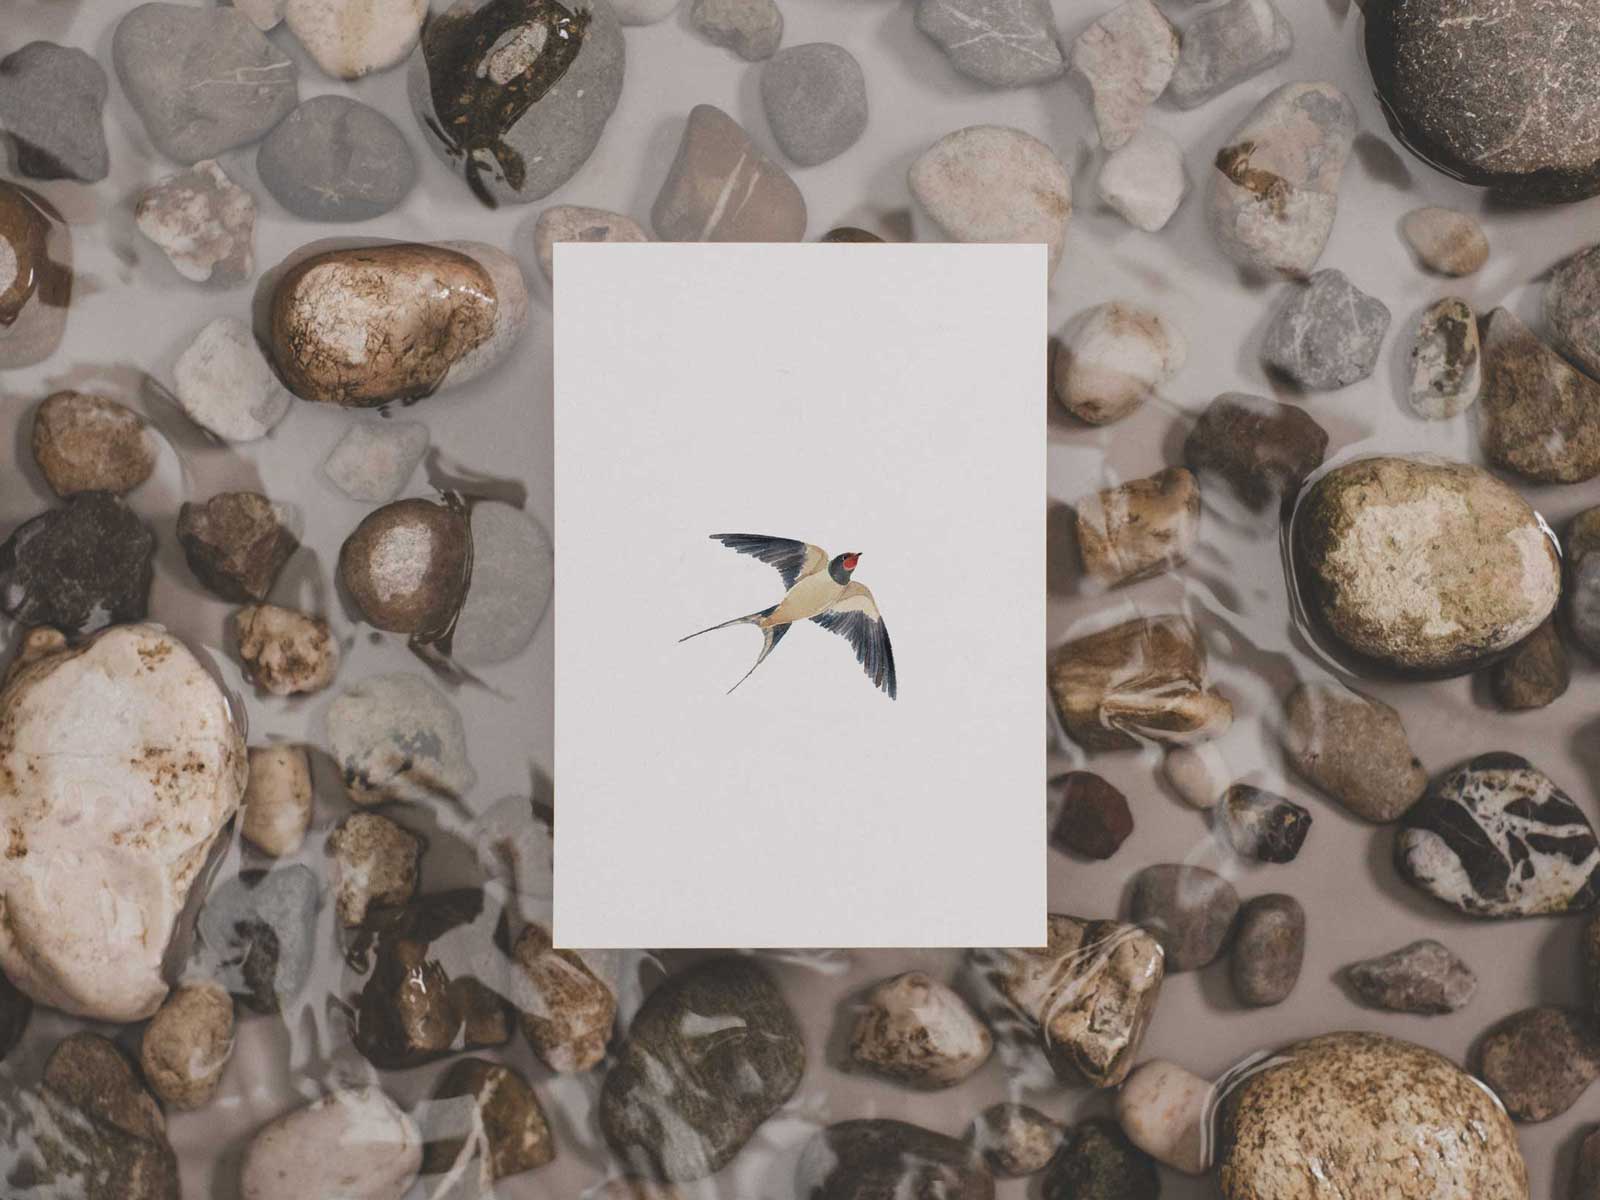 Rauchschwalbe | Postkarte